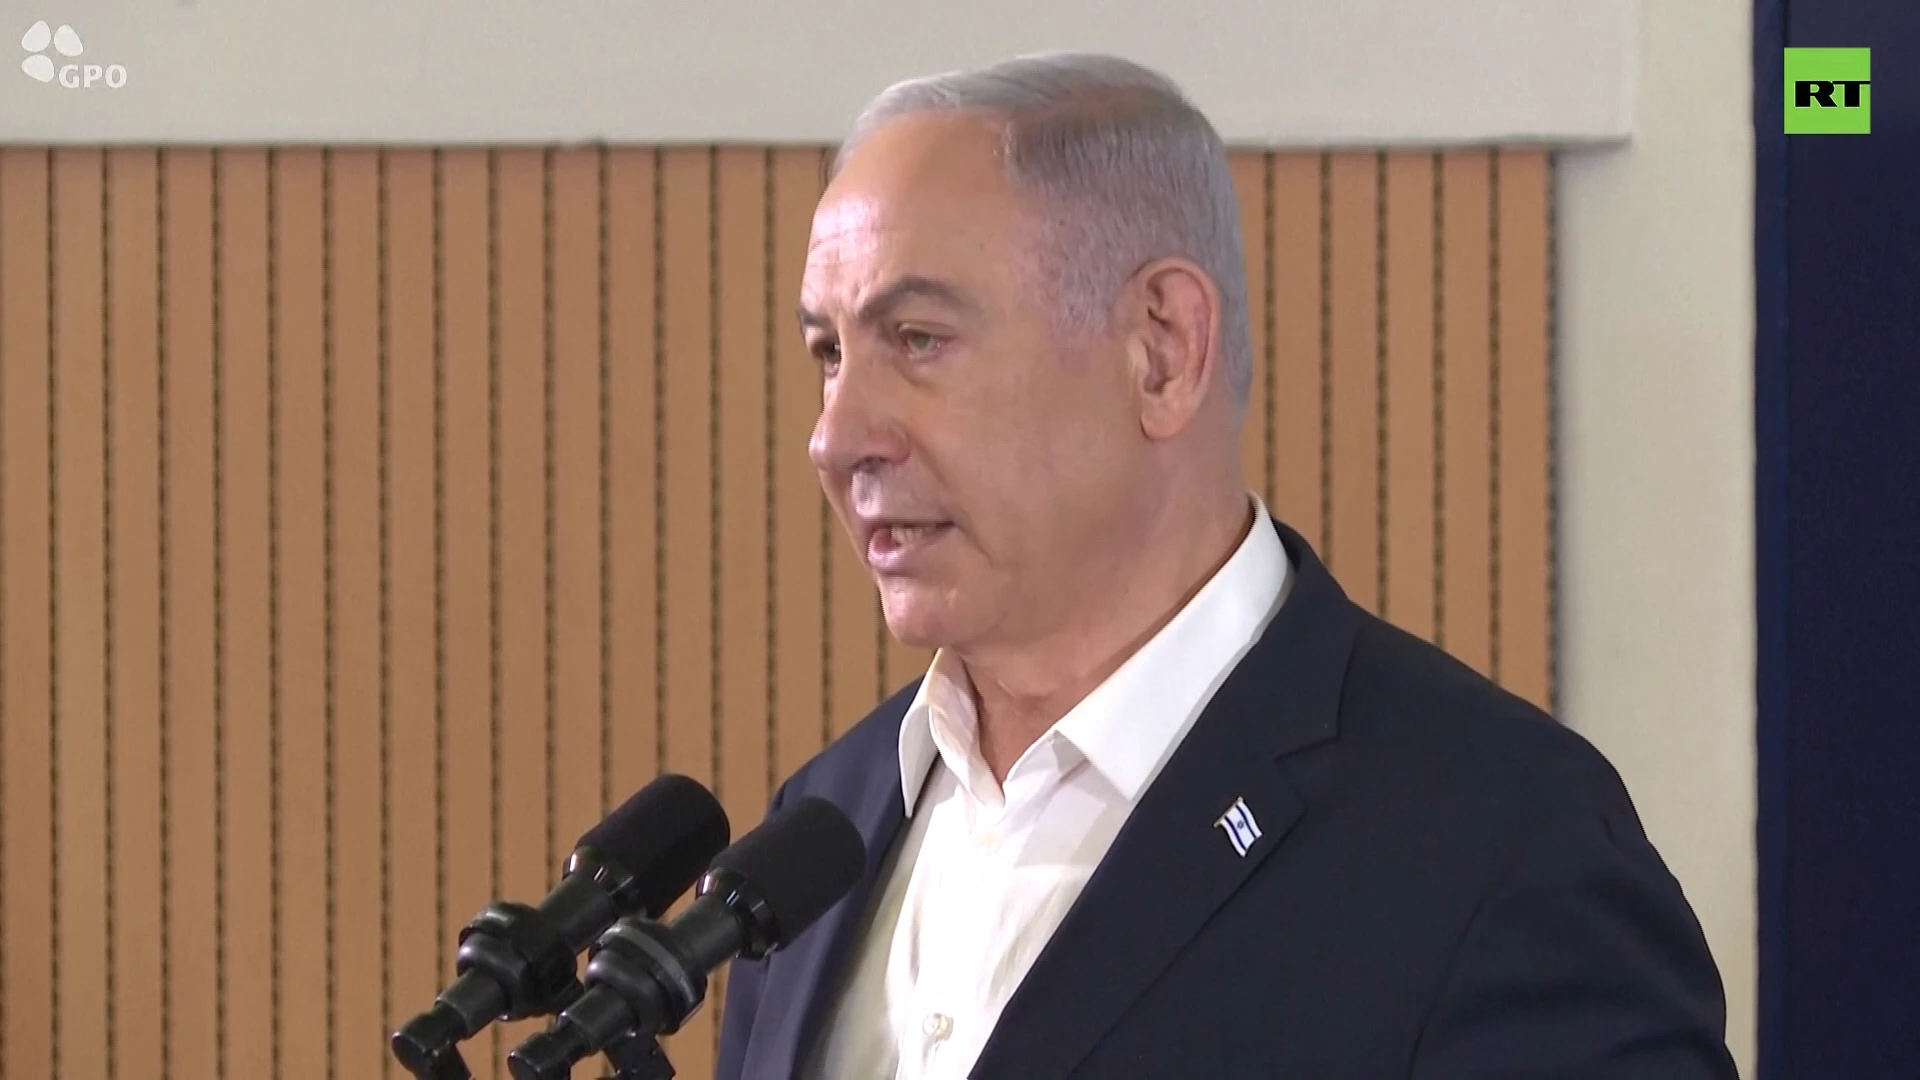 War with Hamas part of ‘global battle’ against ‘barbarism’ – Netanyahu